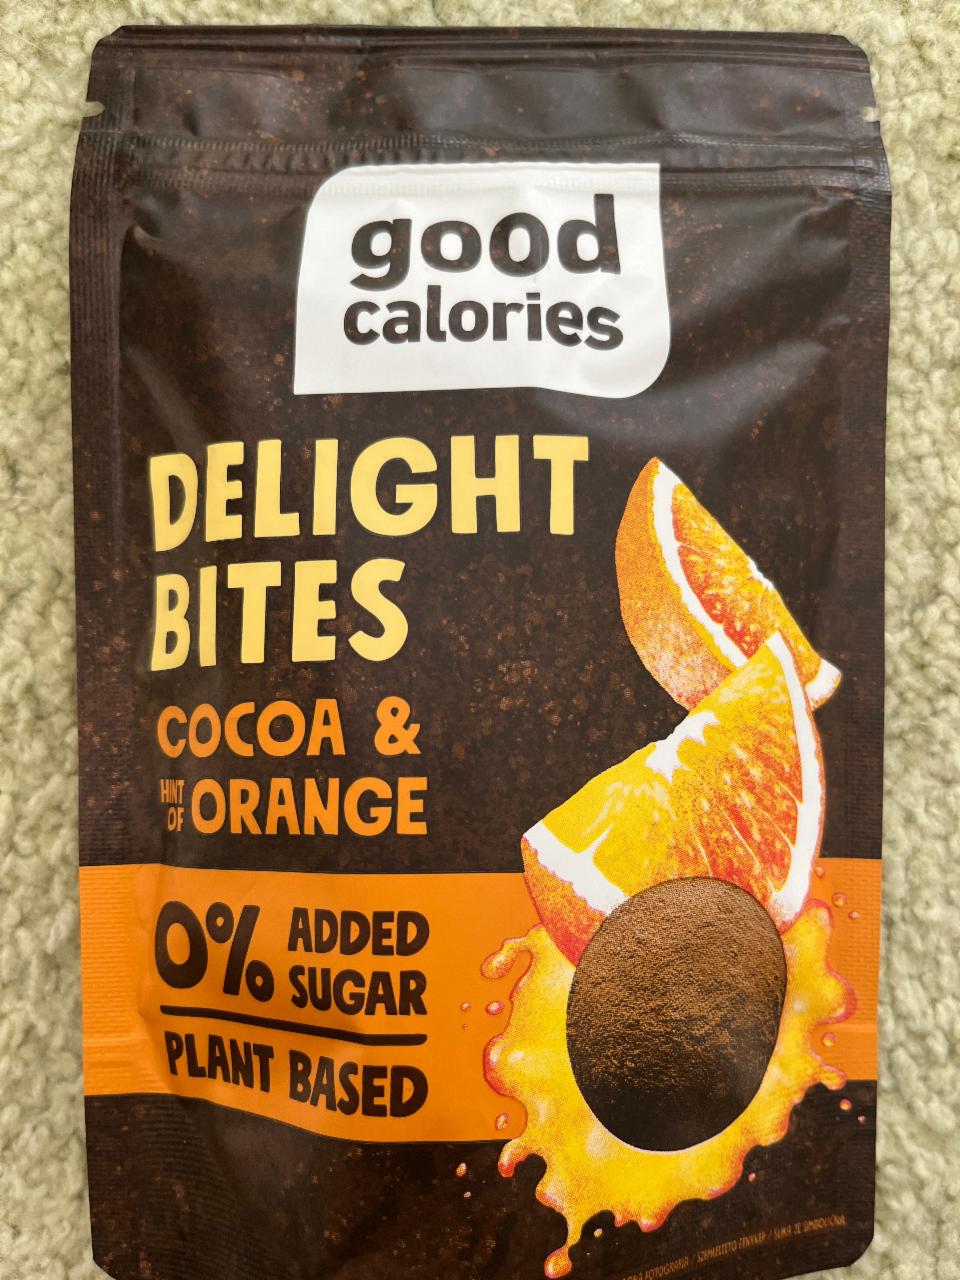 Fotografie - Delight bites cocoa & hint of orange Good Calories